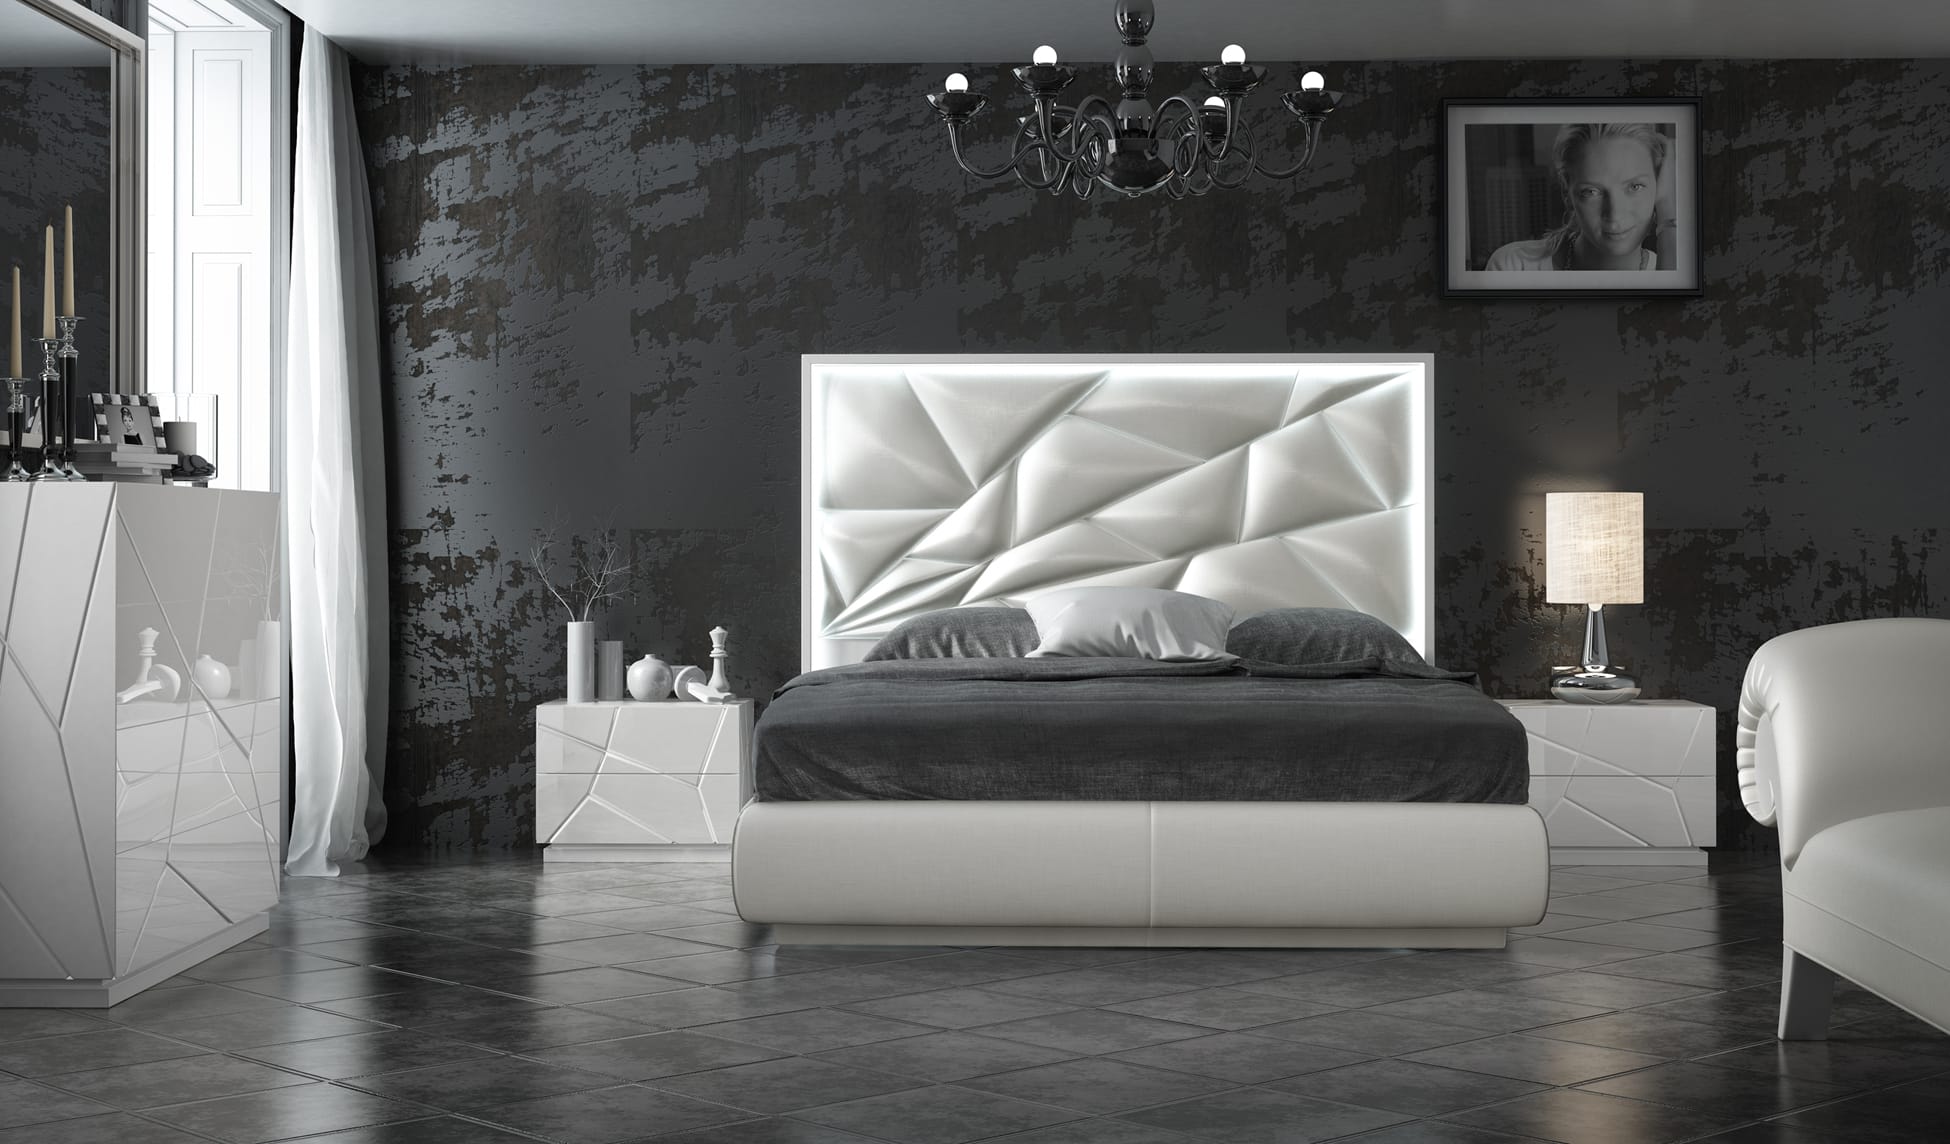 Kiu White Bedroom Set By Esf